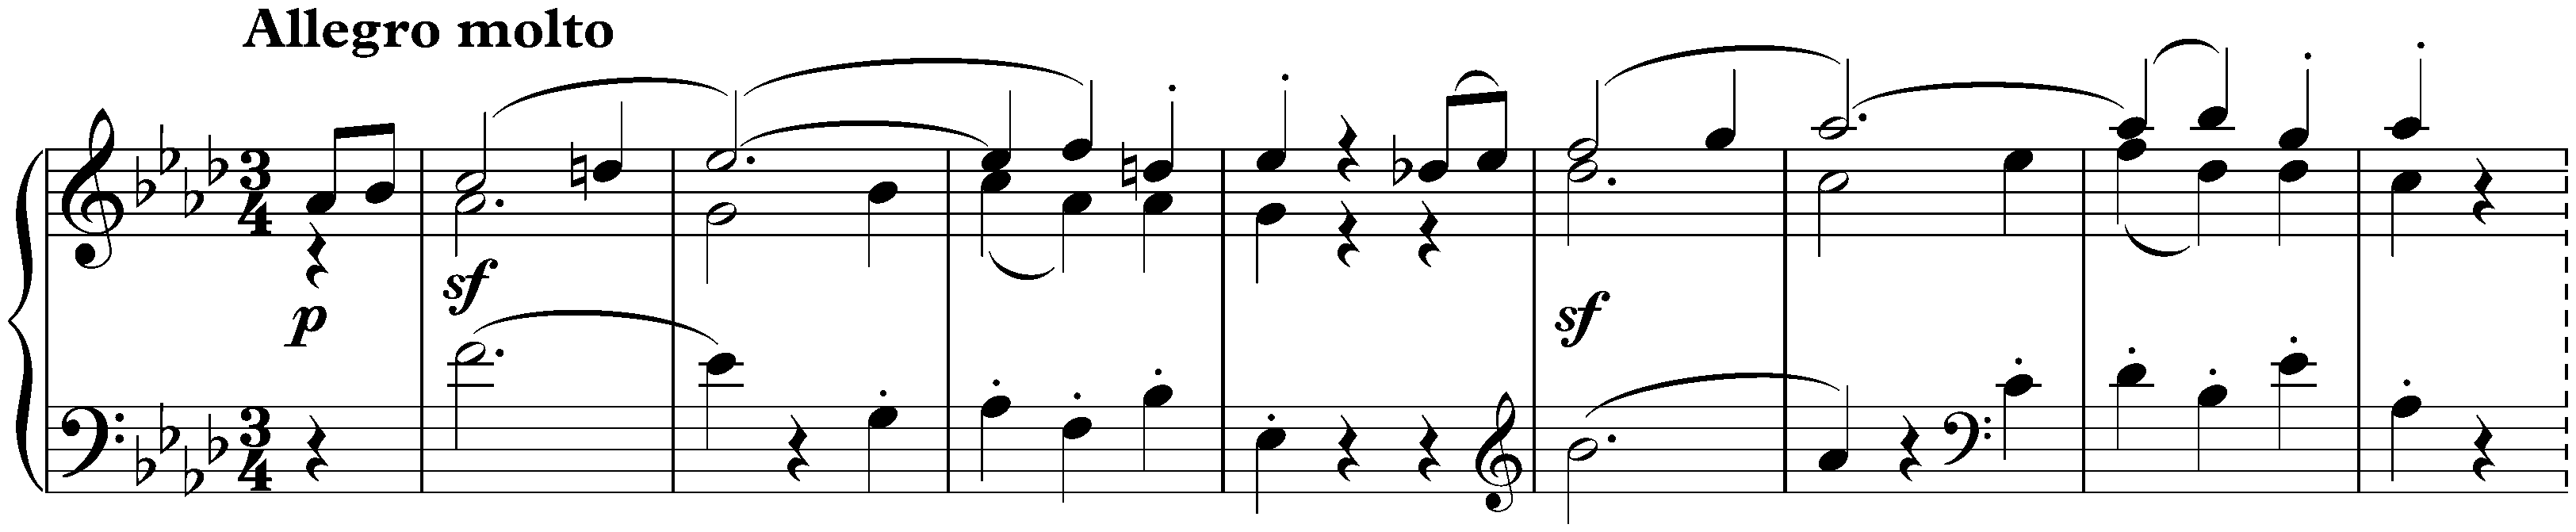 Sonata no. 12 in A-flat major, op. 26; 2. Scherzo: Allegro molto